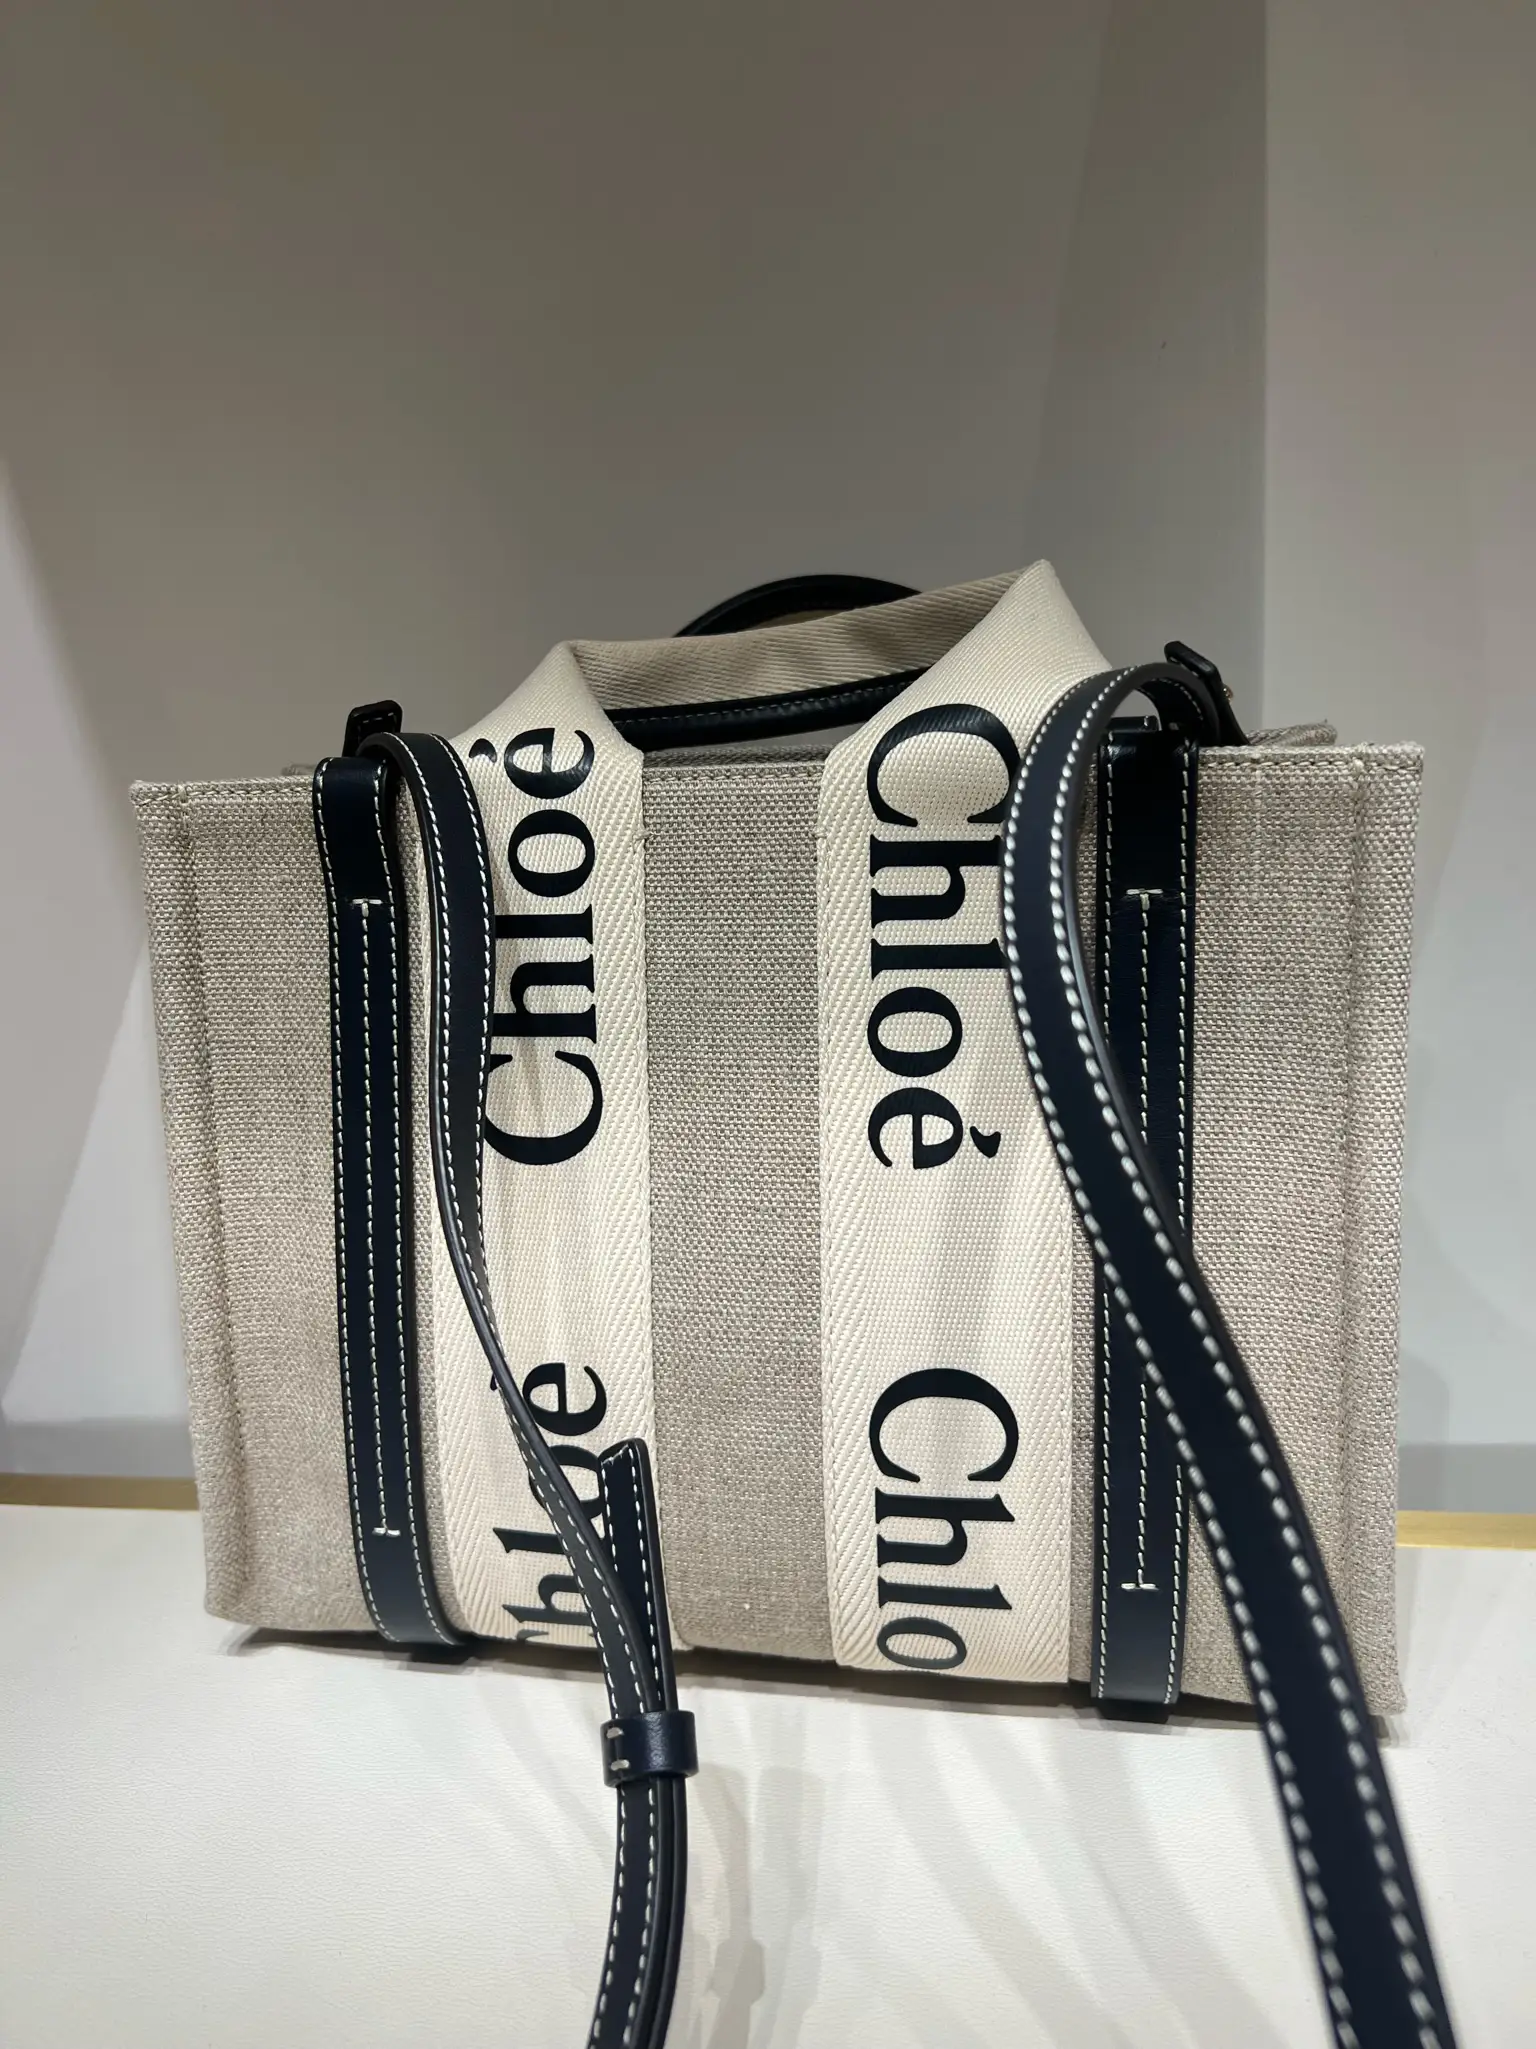 Chloe Handbags: Our Handpicked Favourites